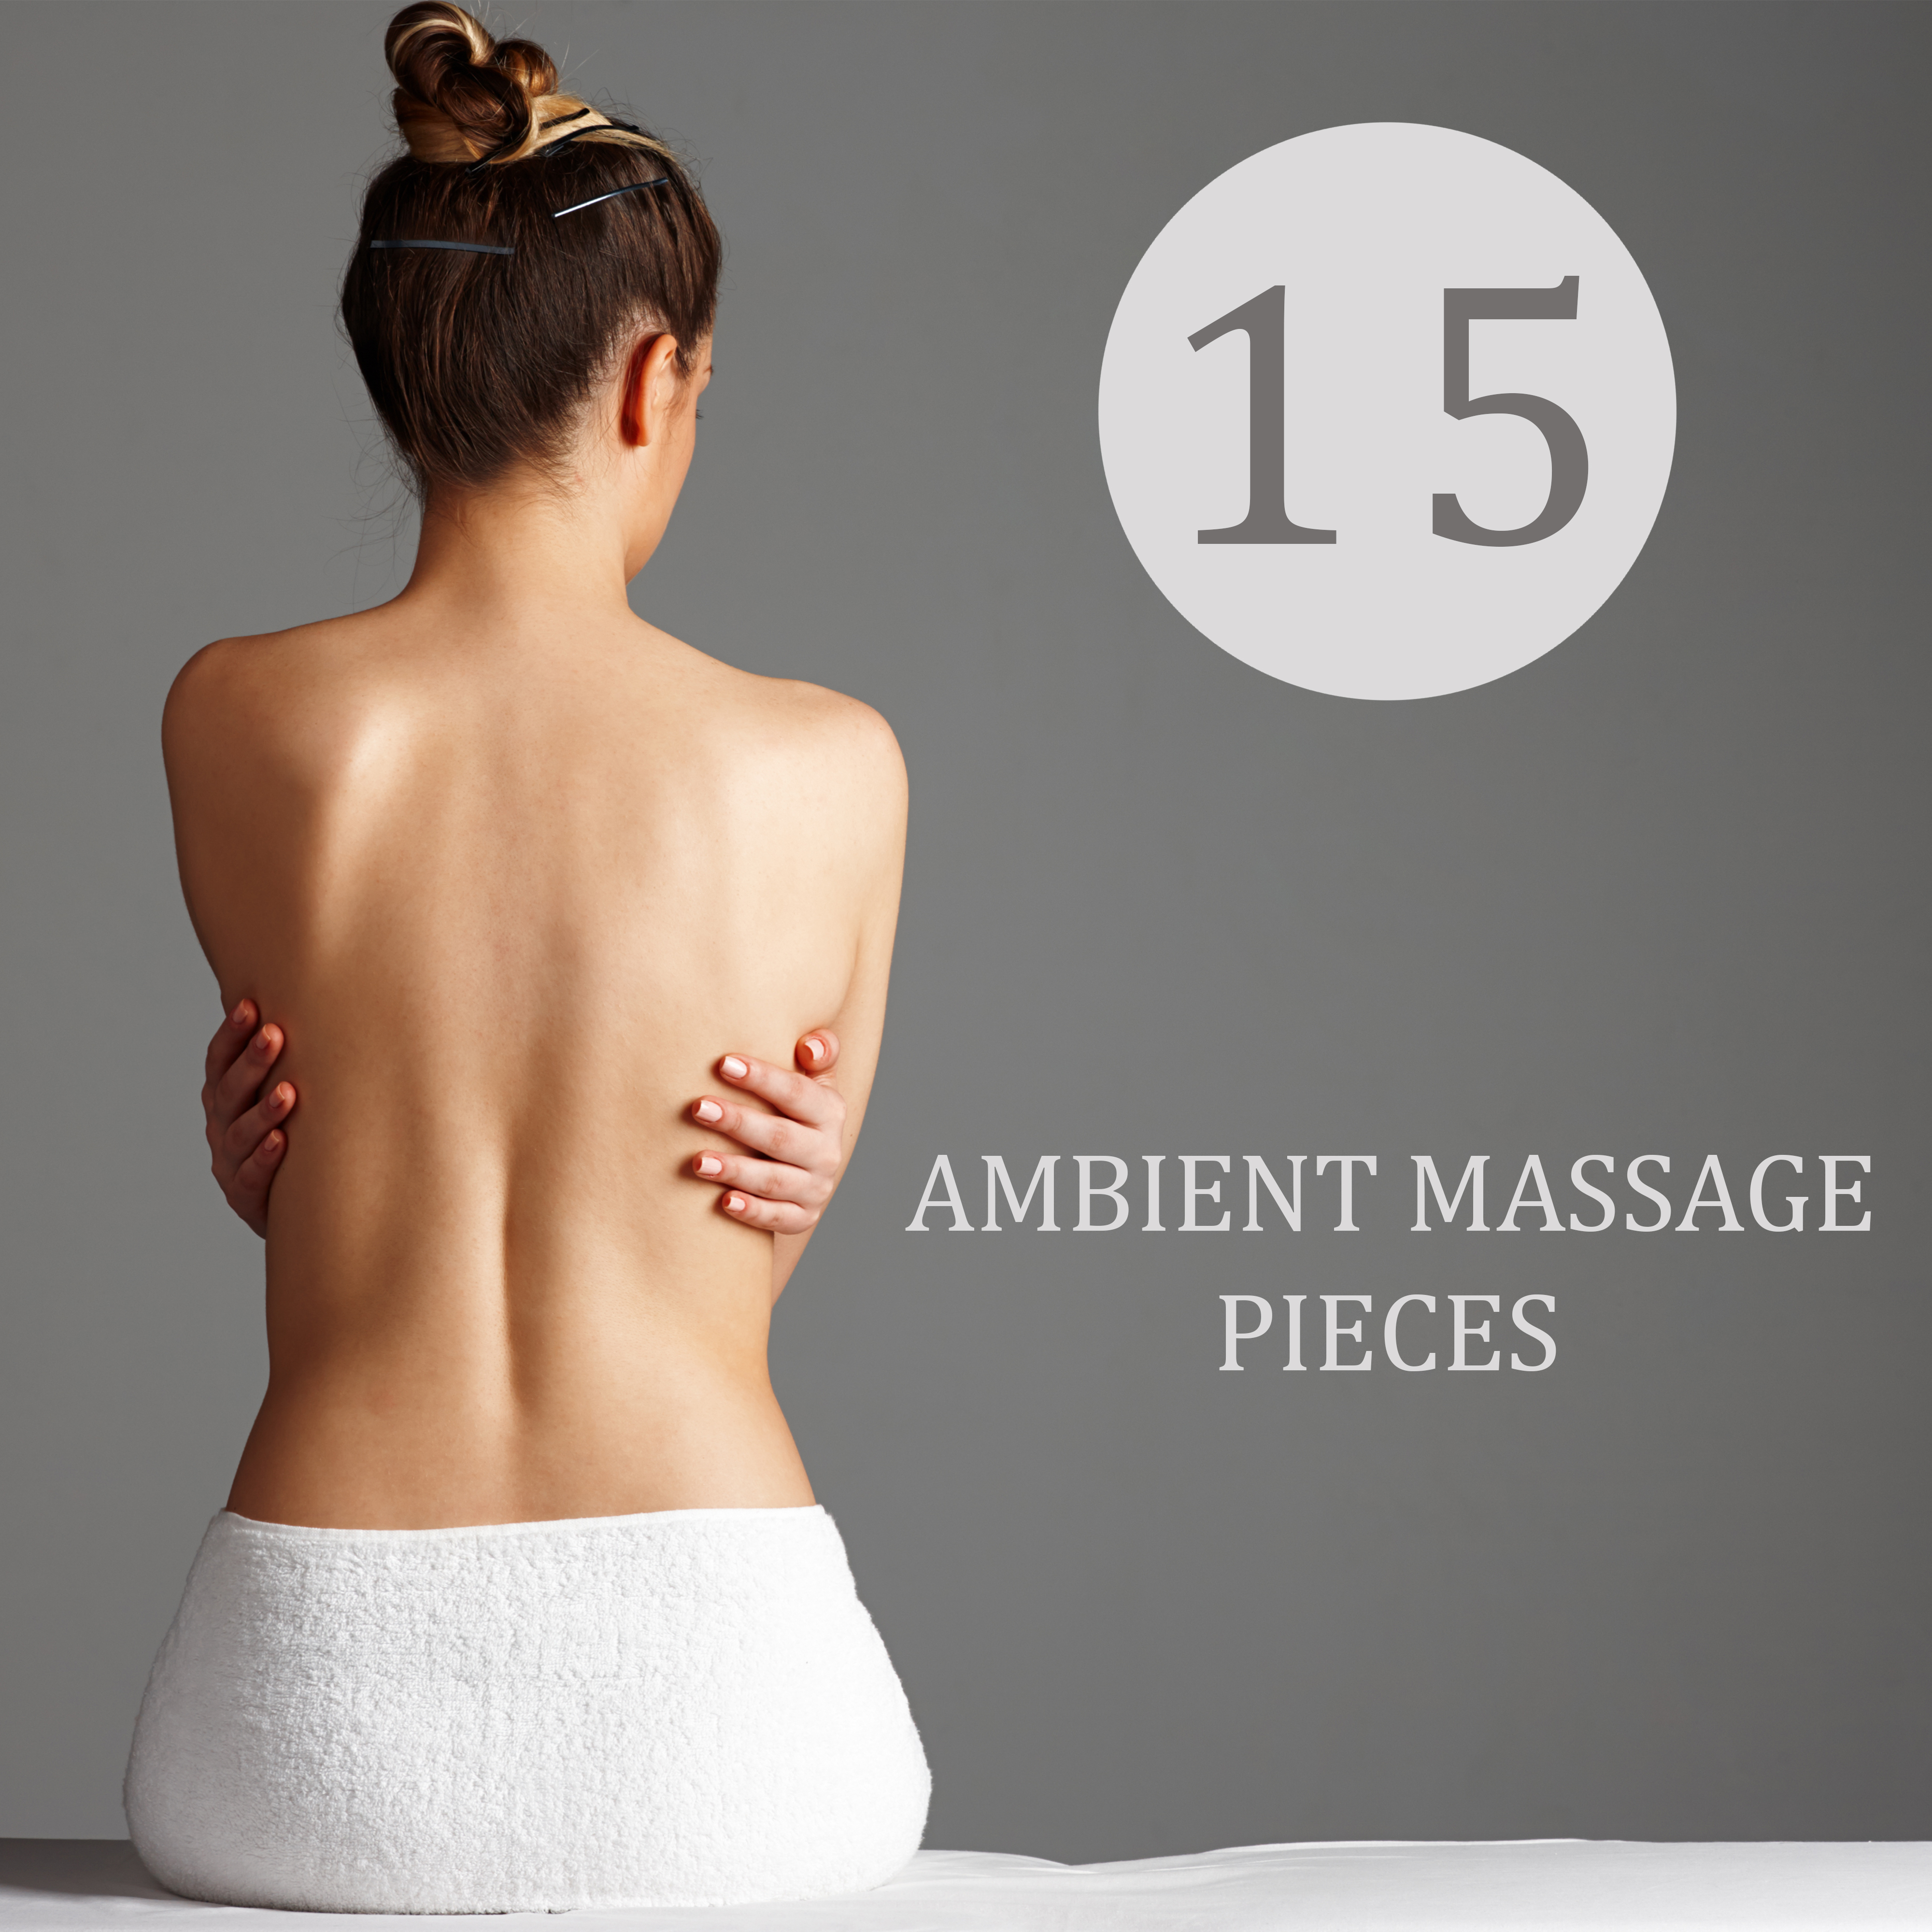 15 Ambient Massage Pieces